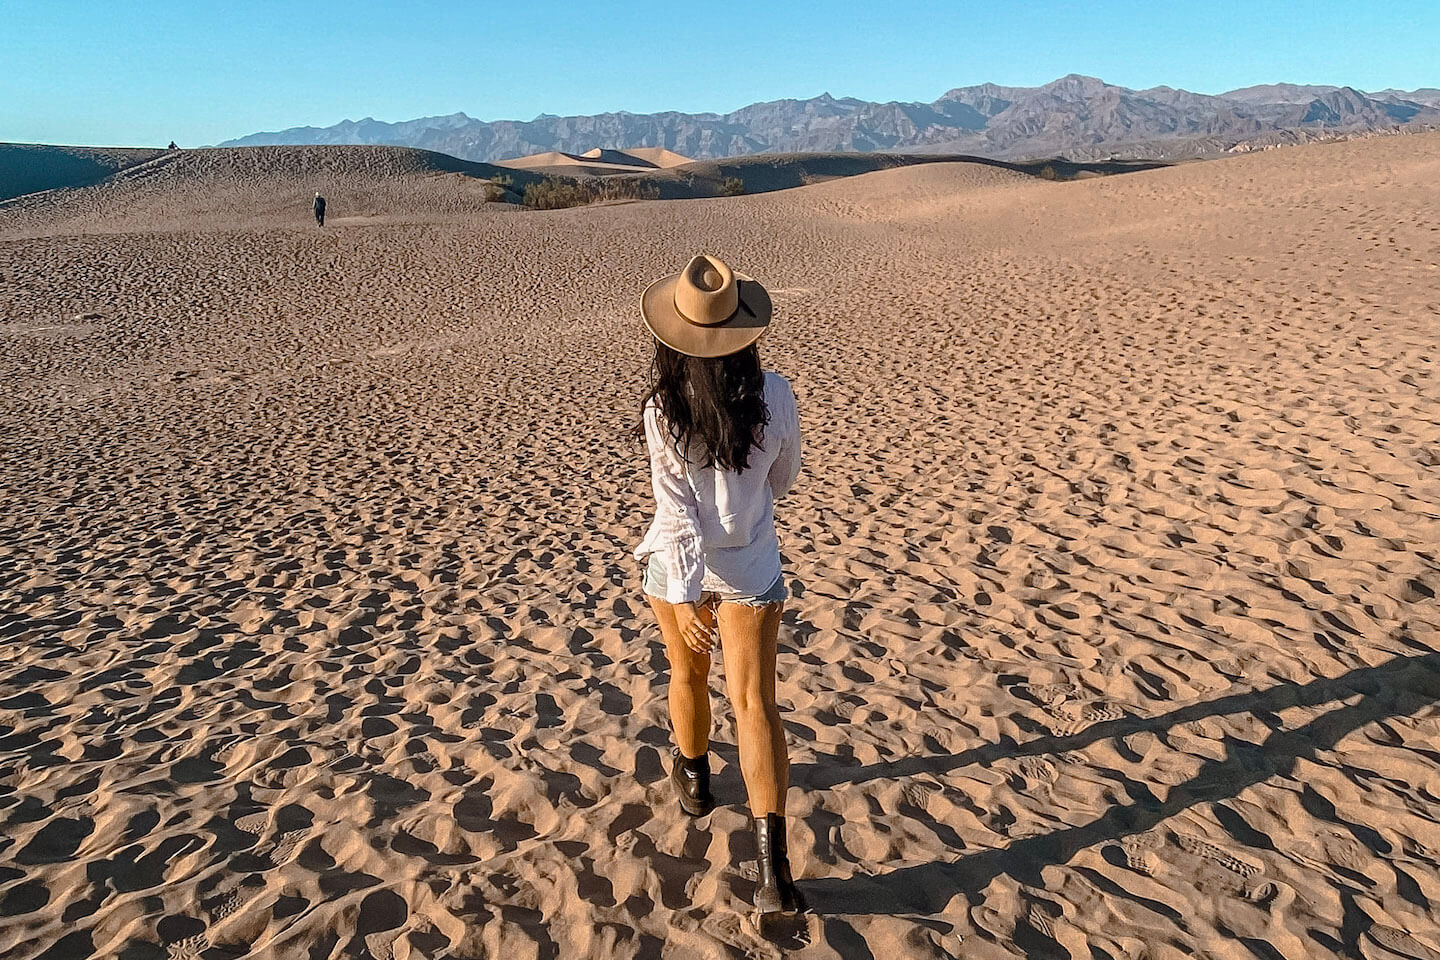 Stella walking on the desert